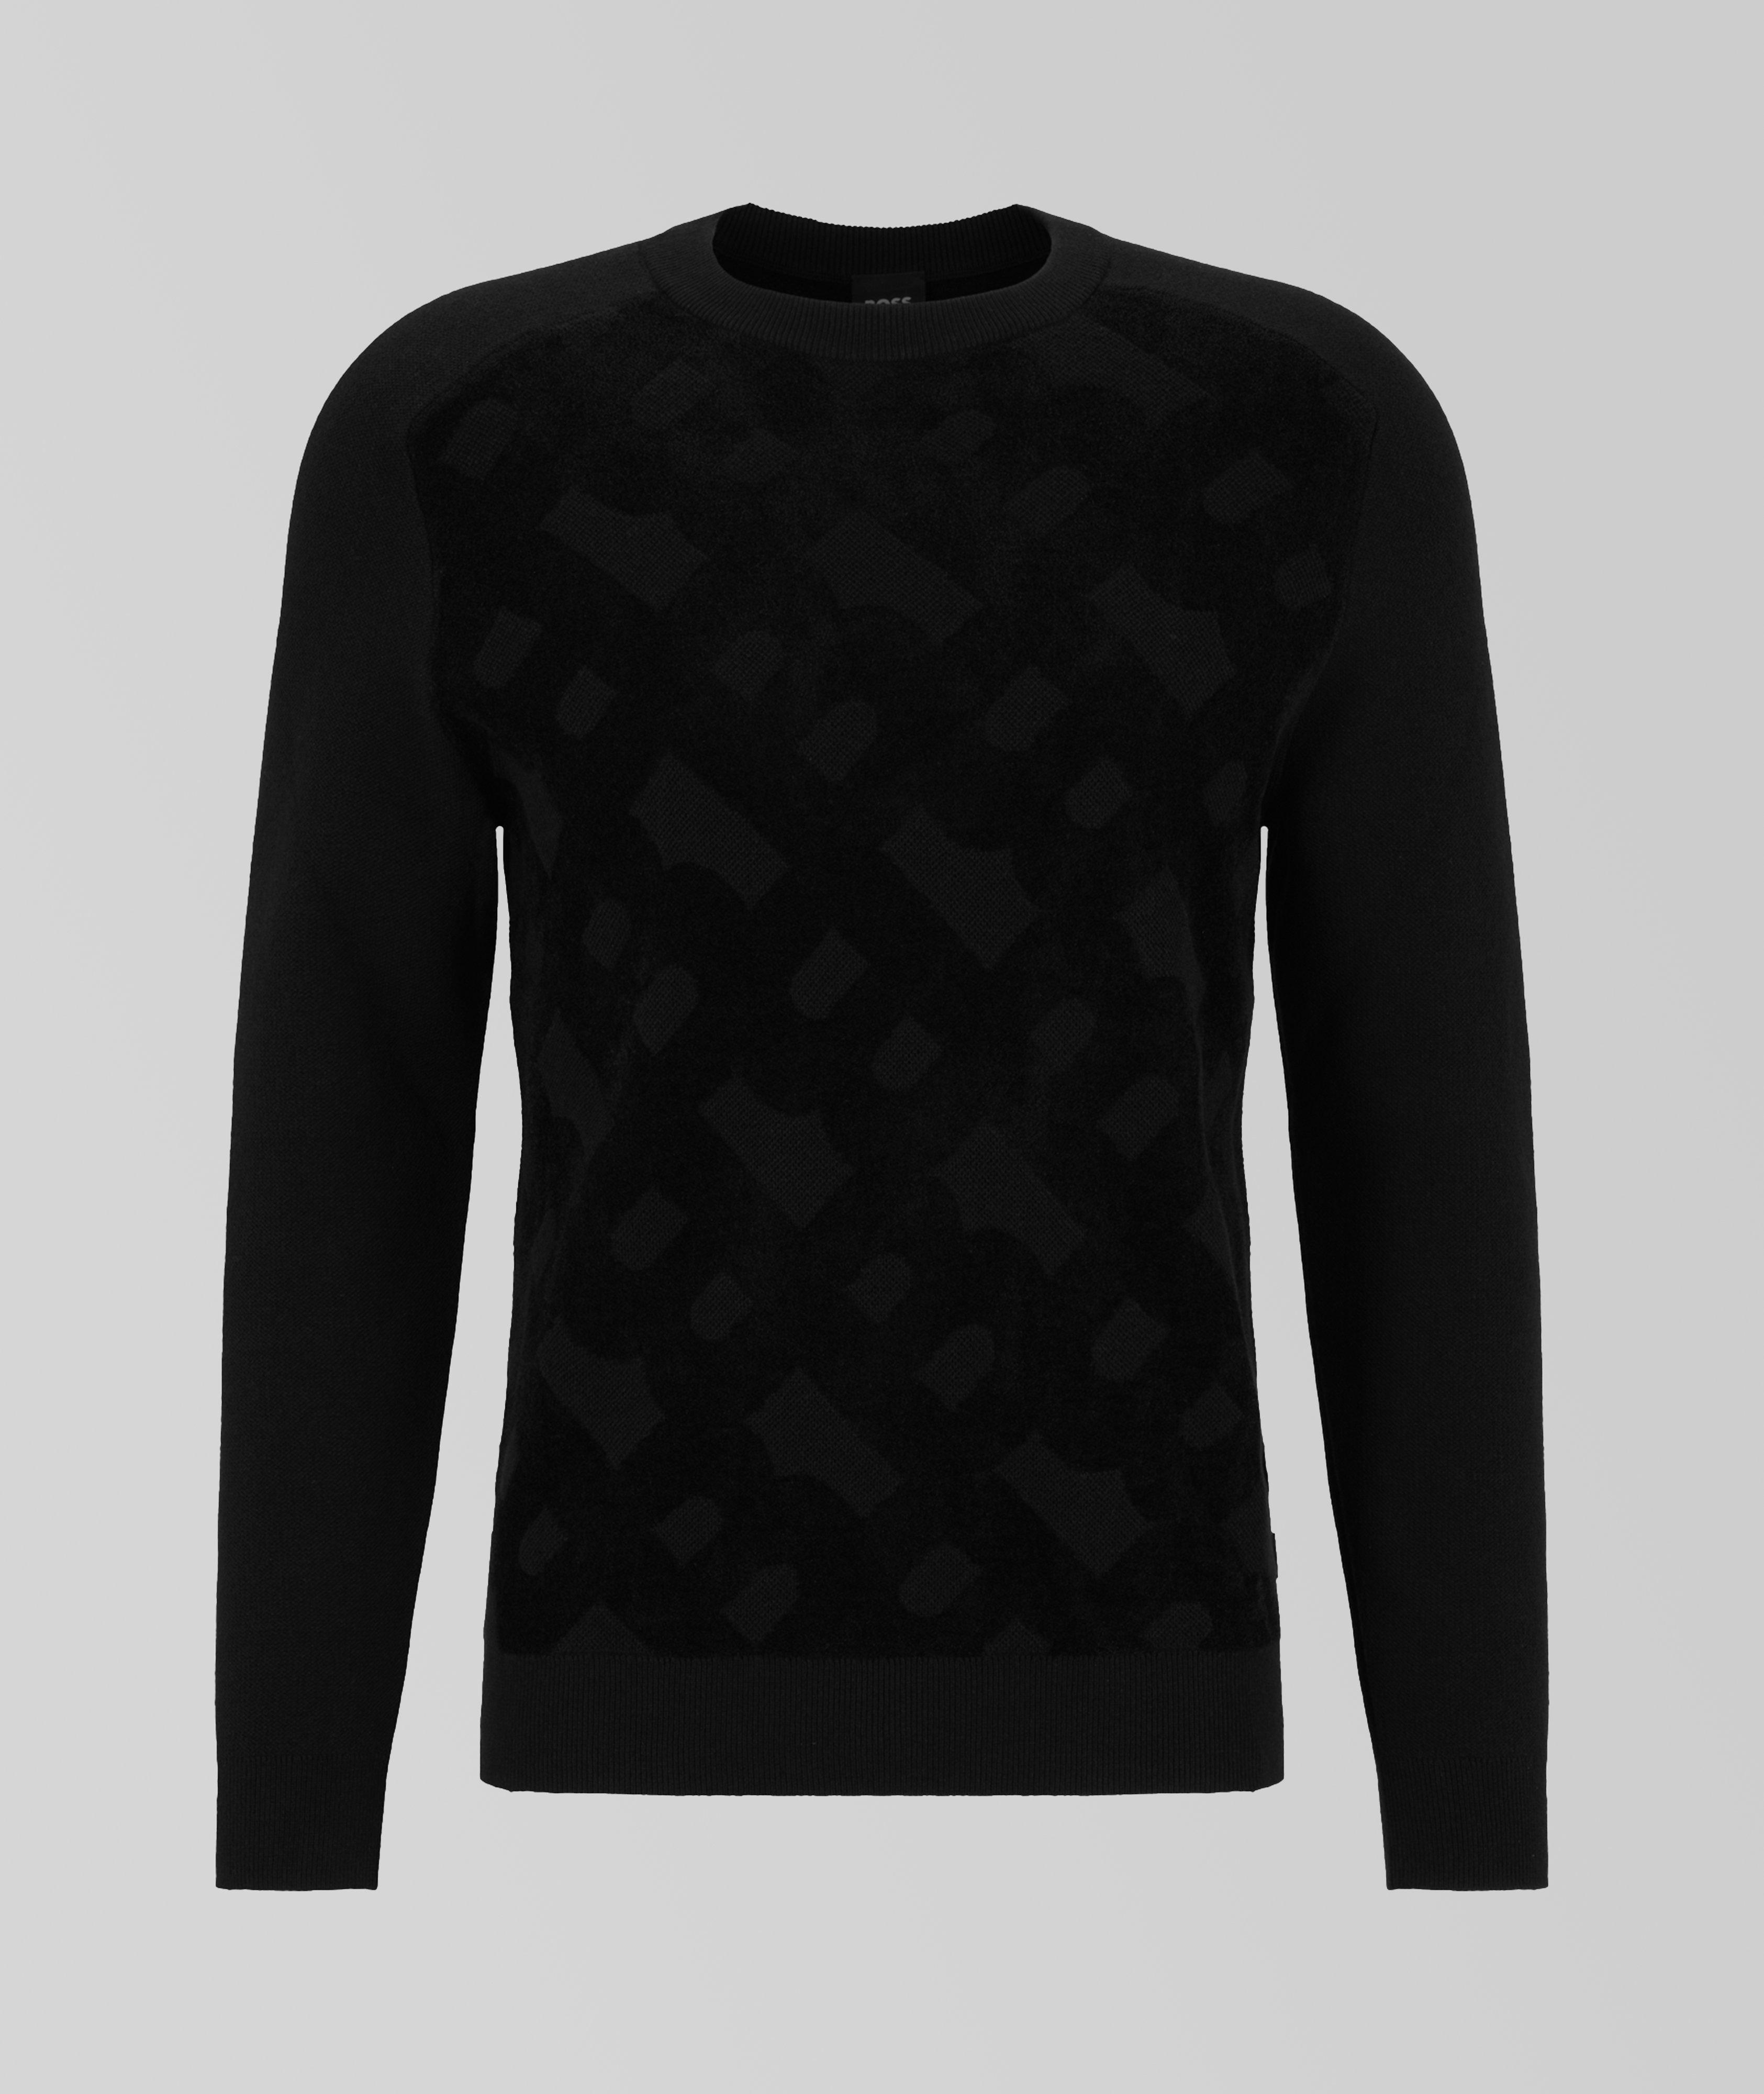 Monogram Jacquard Cotton-Blend Sweater image 0